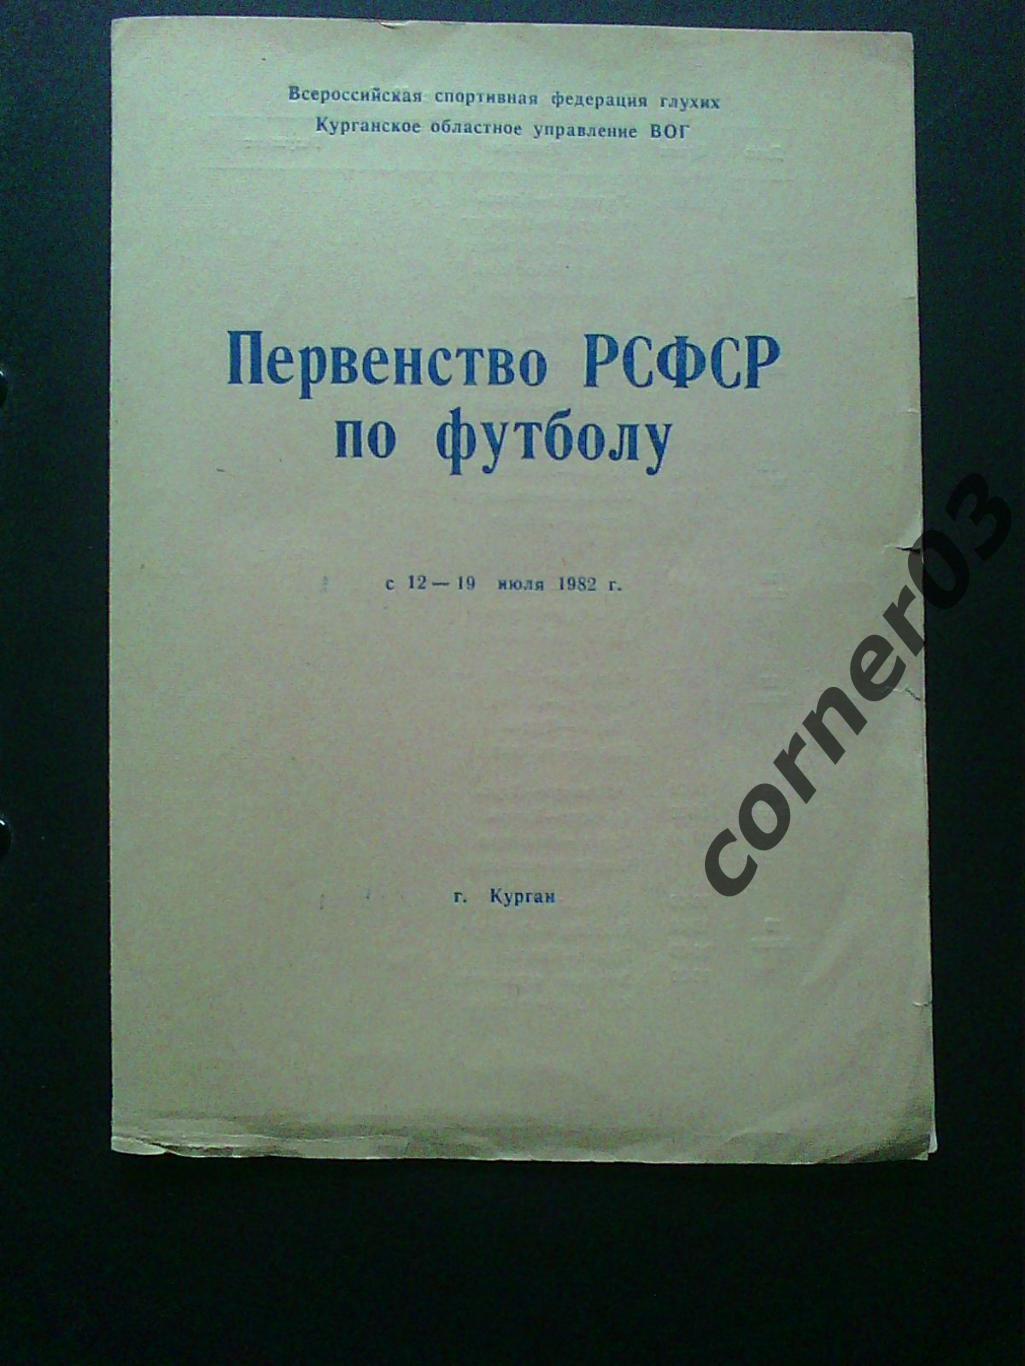 Первенство РСФСР среди глухих, 1982 год, Курган.